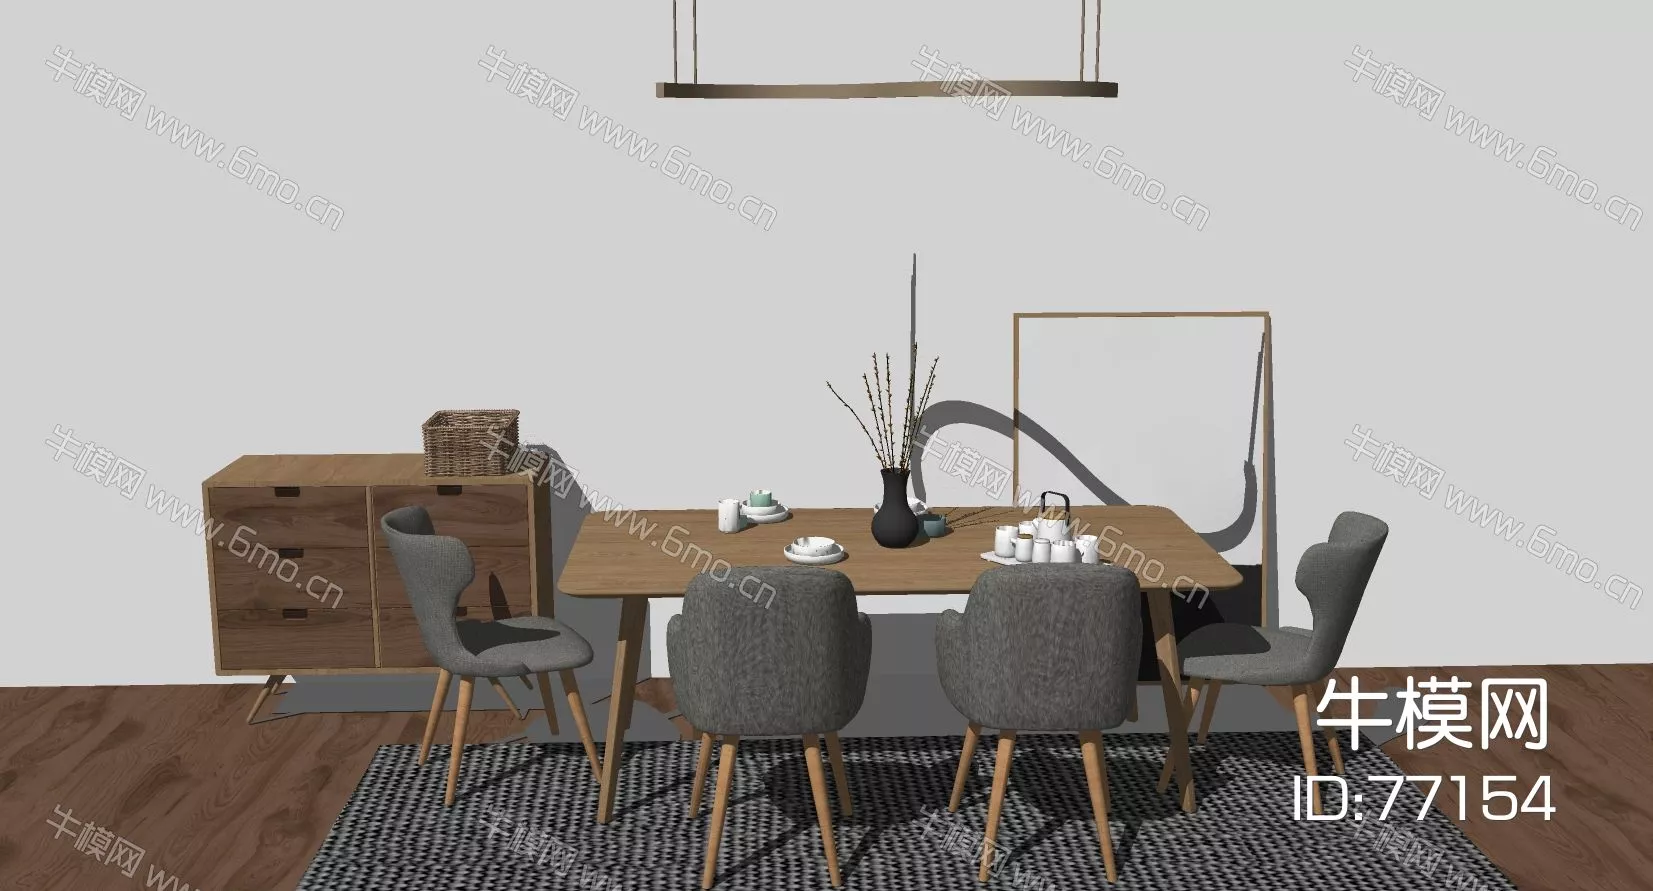 NORDIC DINING TABLE SET - SKETCHUP 3D MODEL - ENSCAPE - 77154